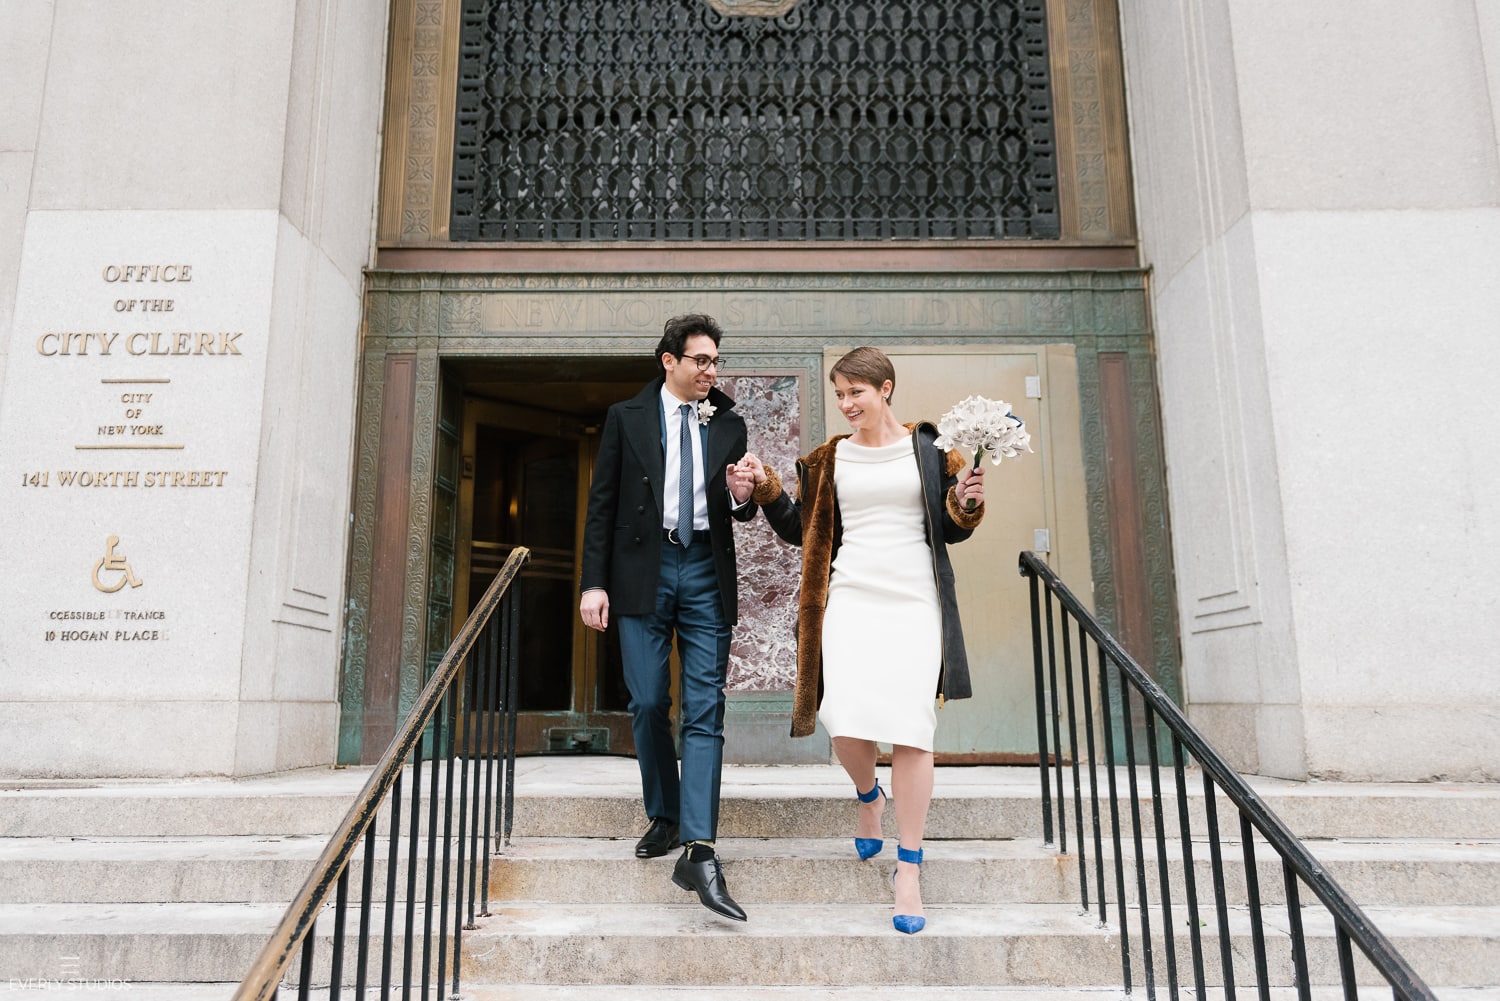 New York City Hall elopement wedding. Photos by New York wedding photographer Everly Studios, www.everlystudios.com